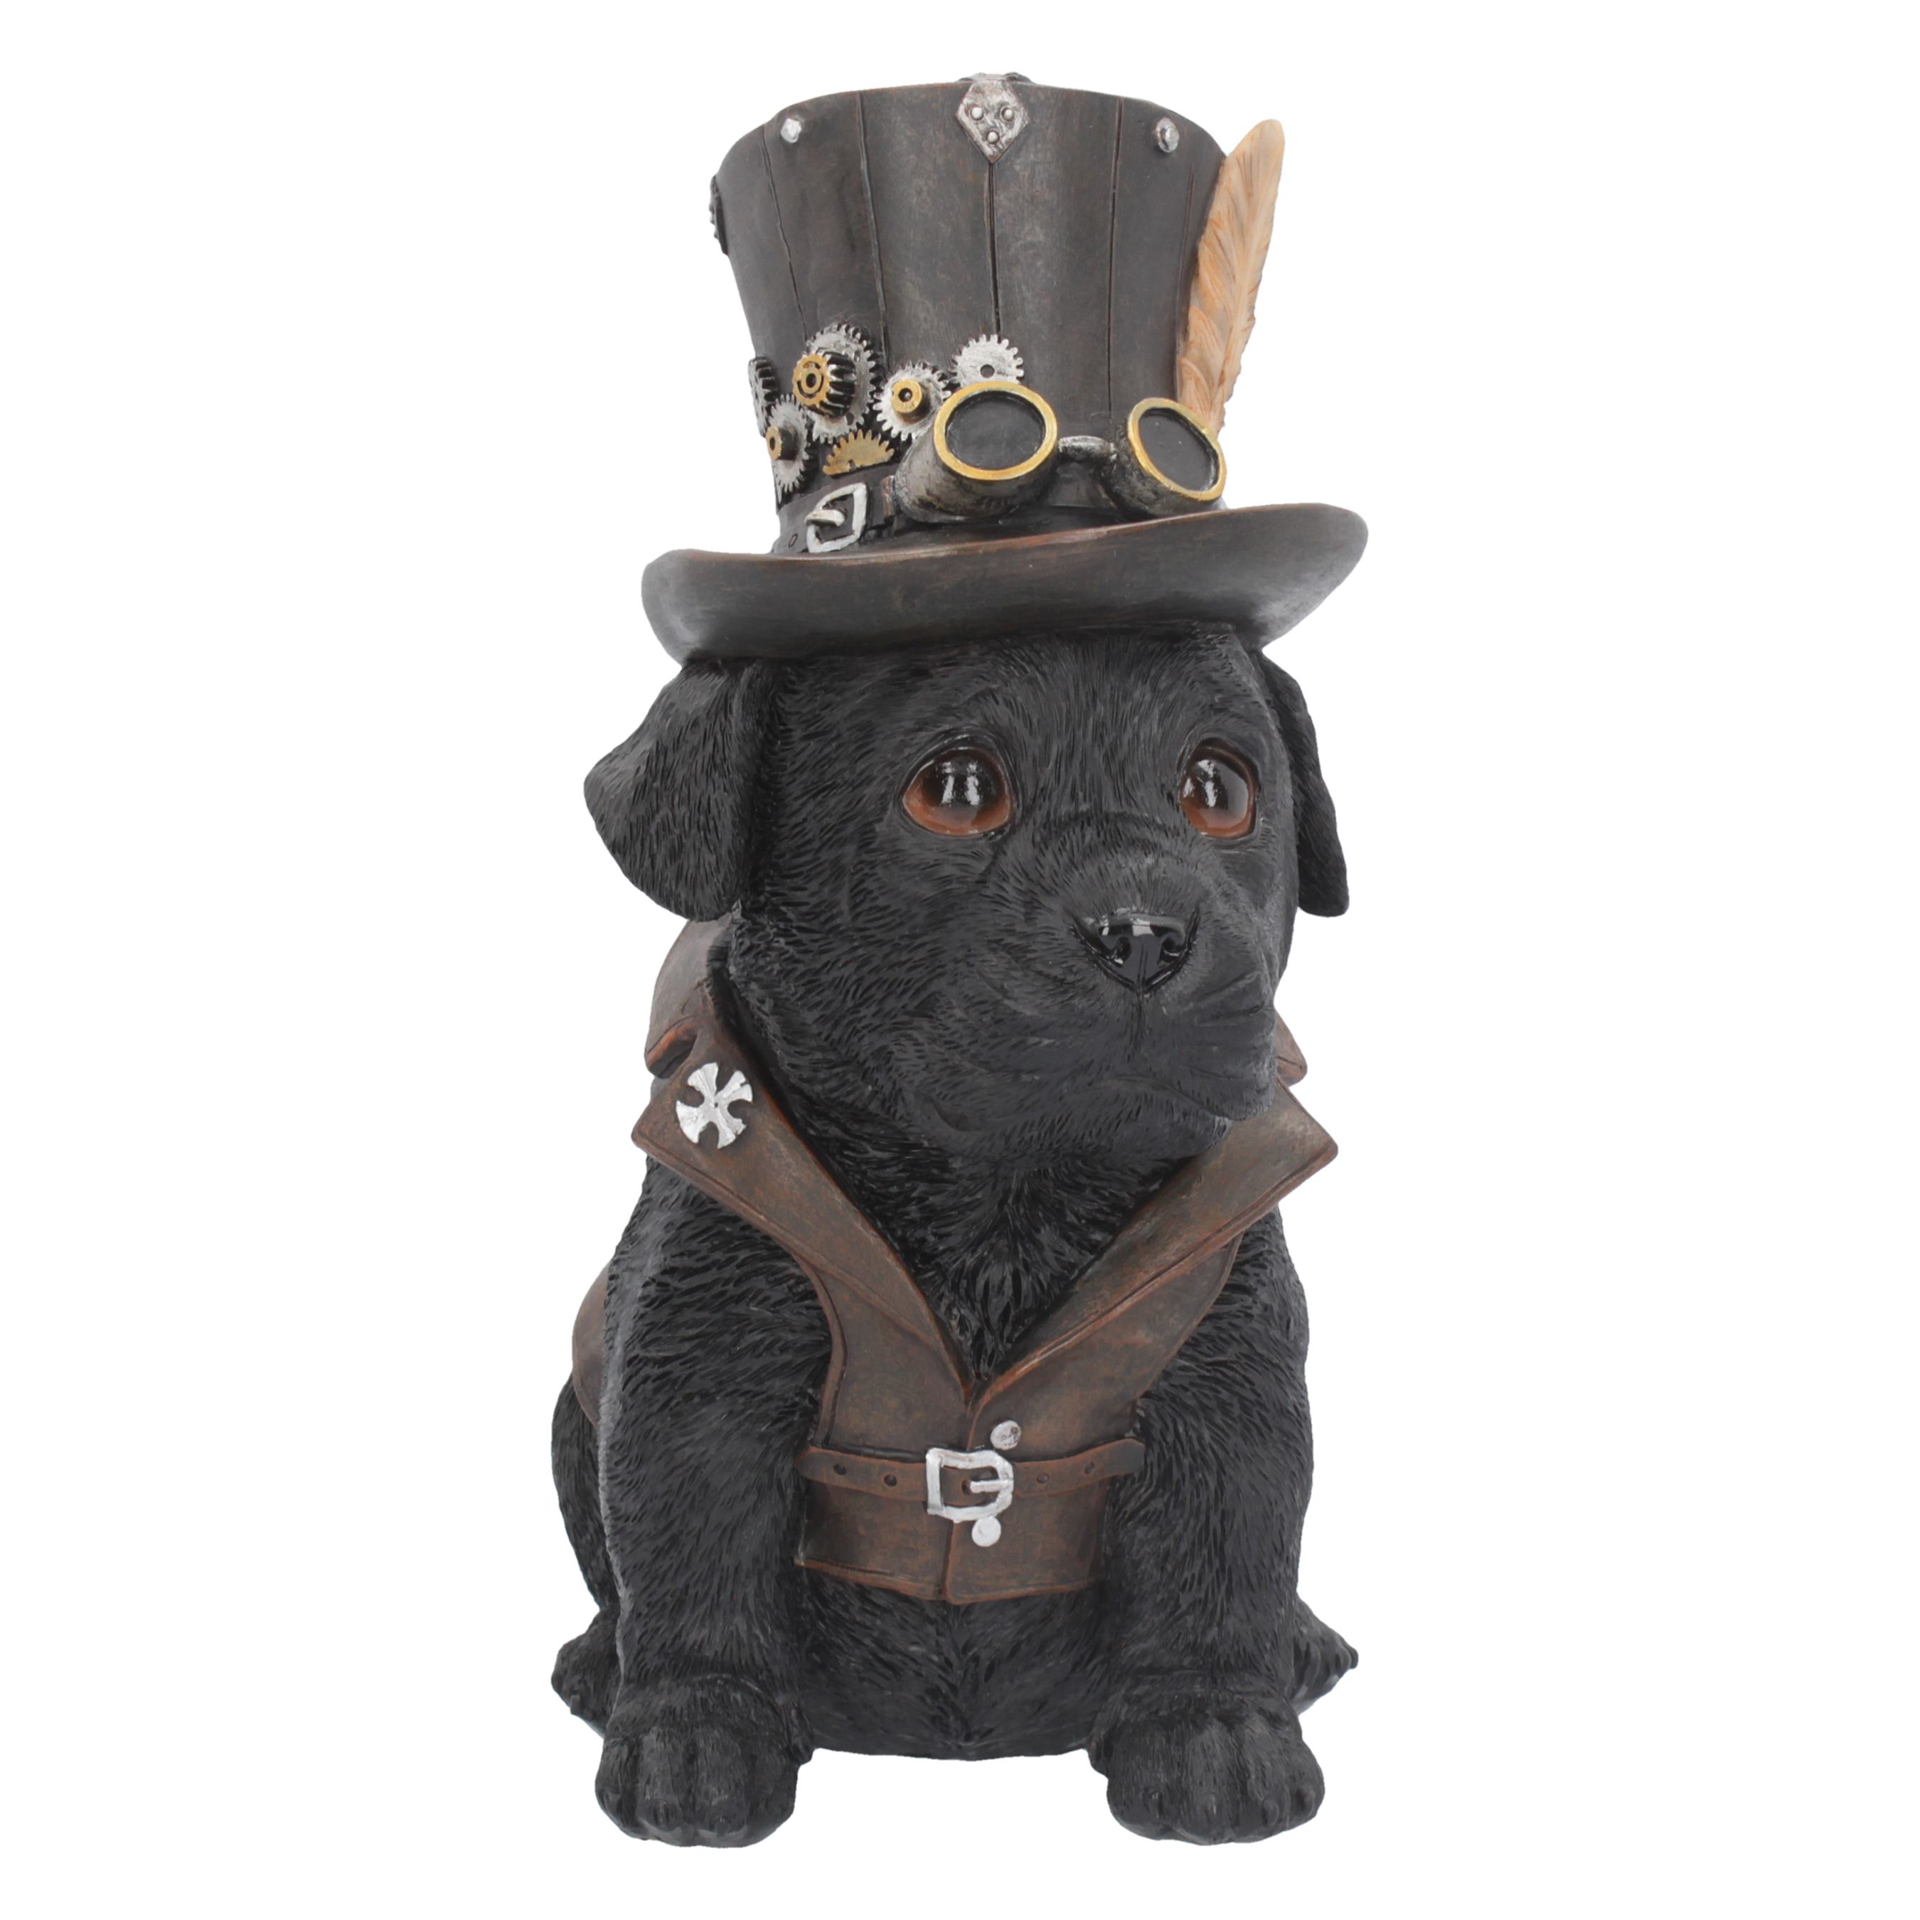 Cogsmiths - Figurine de chien steampunk 21cm